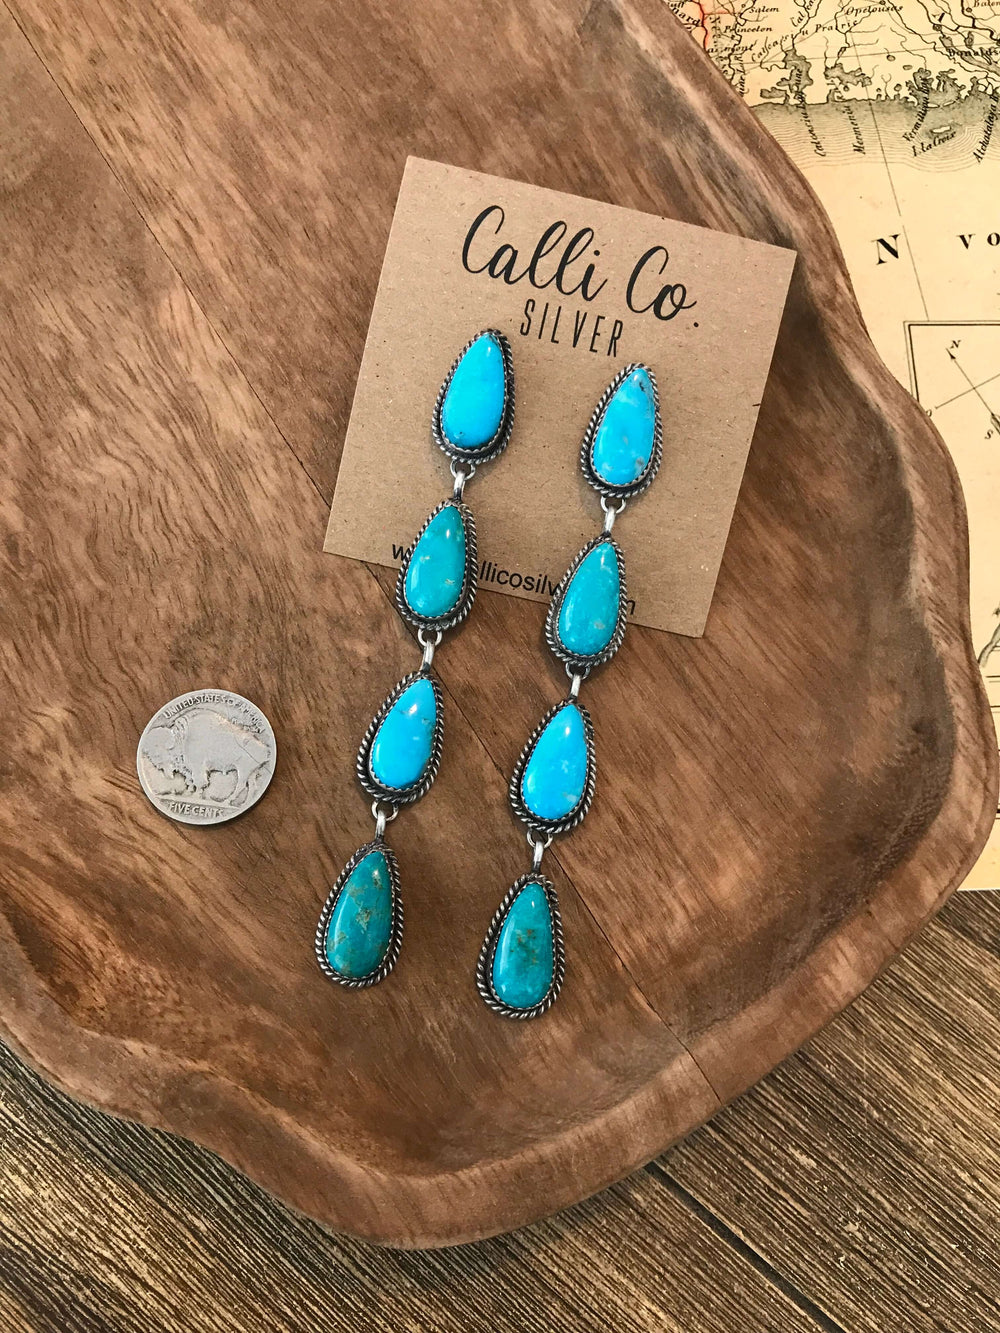 The 4 Stone Drop Earrings, 3-Earrings-Calli Co., Turquoise and Silver Jewelry, Native American Handmade, Zuni Tribe, Navajo Tribe, Brock Texas